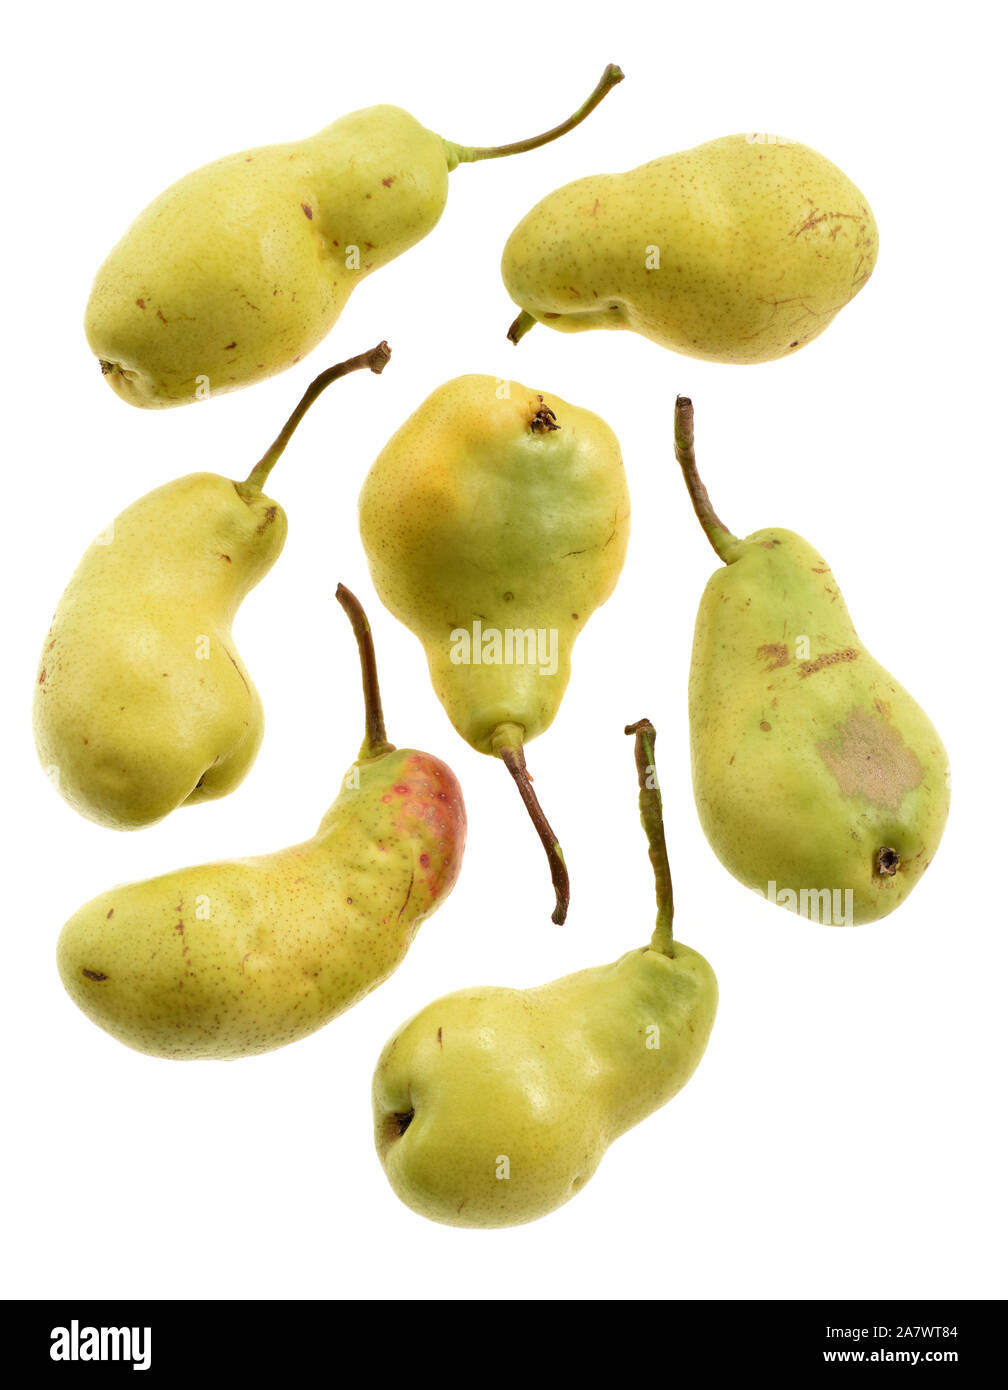 Three Ripe Yellow Skinned Pears Slightly Imperfect Fresh Organic